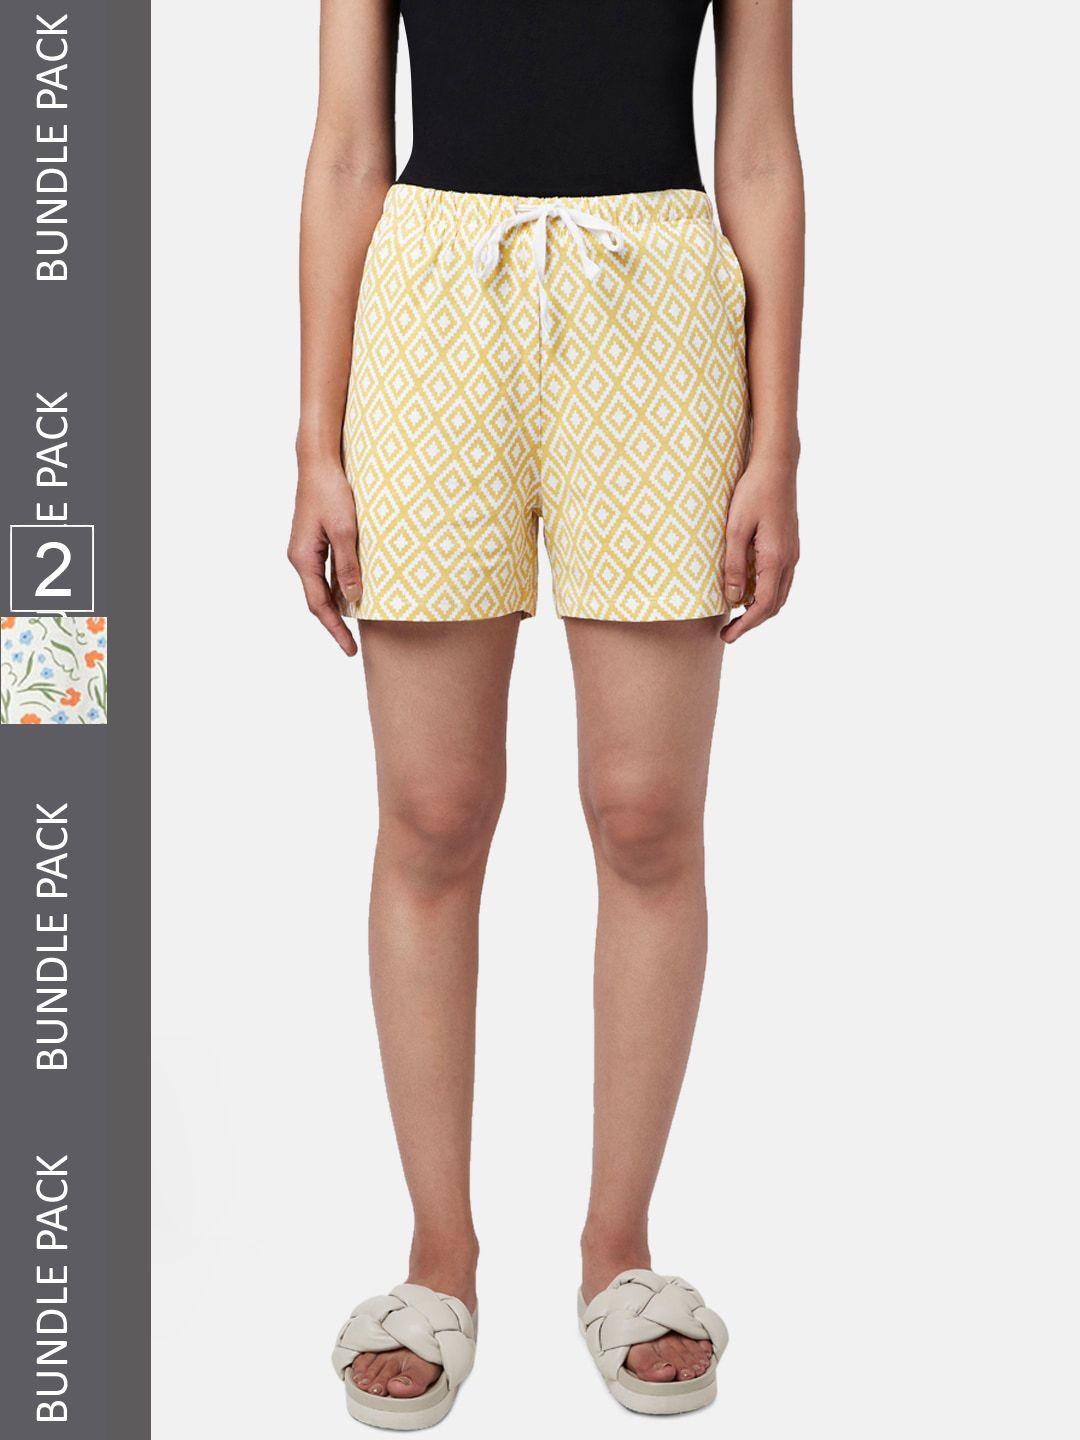 yu-by-pantaloons-women-pack-of-2-printed-cotton-shorts